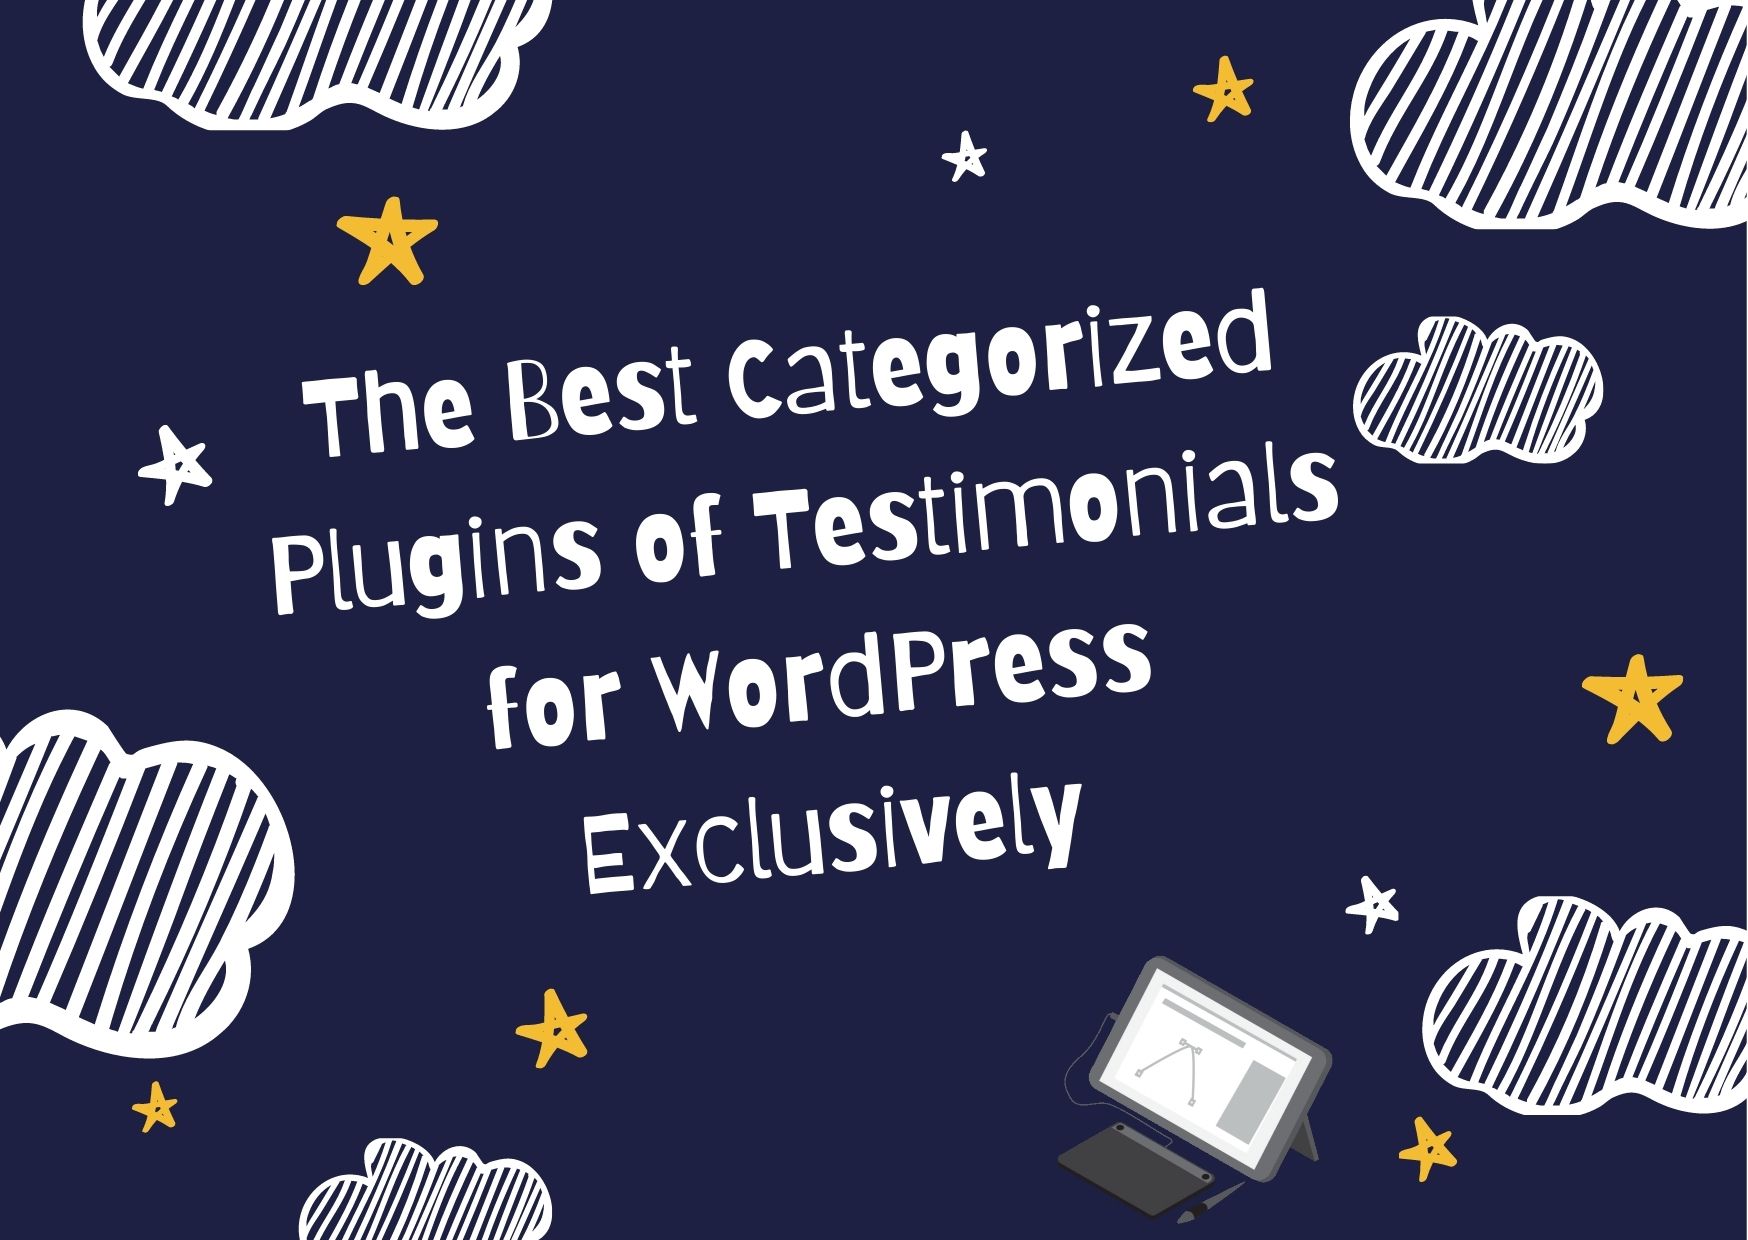 The Best Categorized Plugins of Testimonials for WordPress